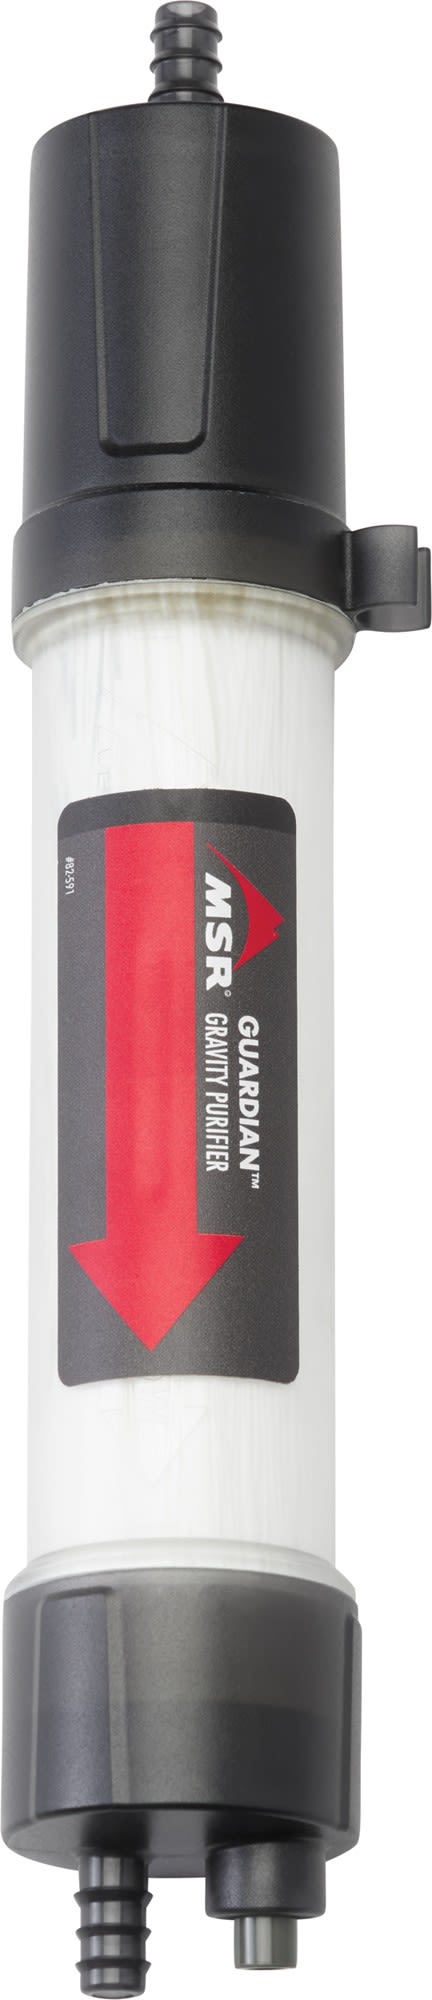 MSR Guardian Gravity Replacement Cartridge Grau- Wasseraufbereitung- Grsse One Size - Farbe Grey unter MSR